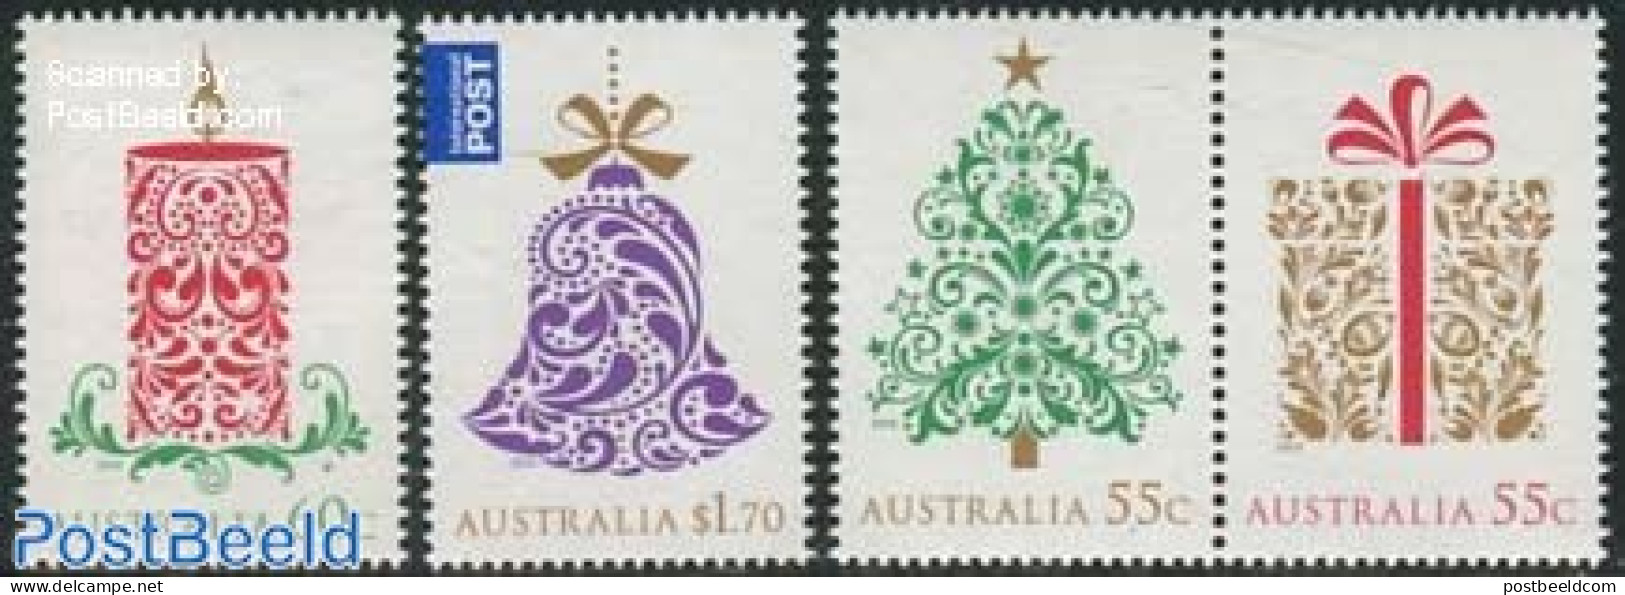 Australia 2013 Christmas 4v (2v+[:]), Mint NH, Religion - Christmas - Neufs